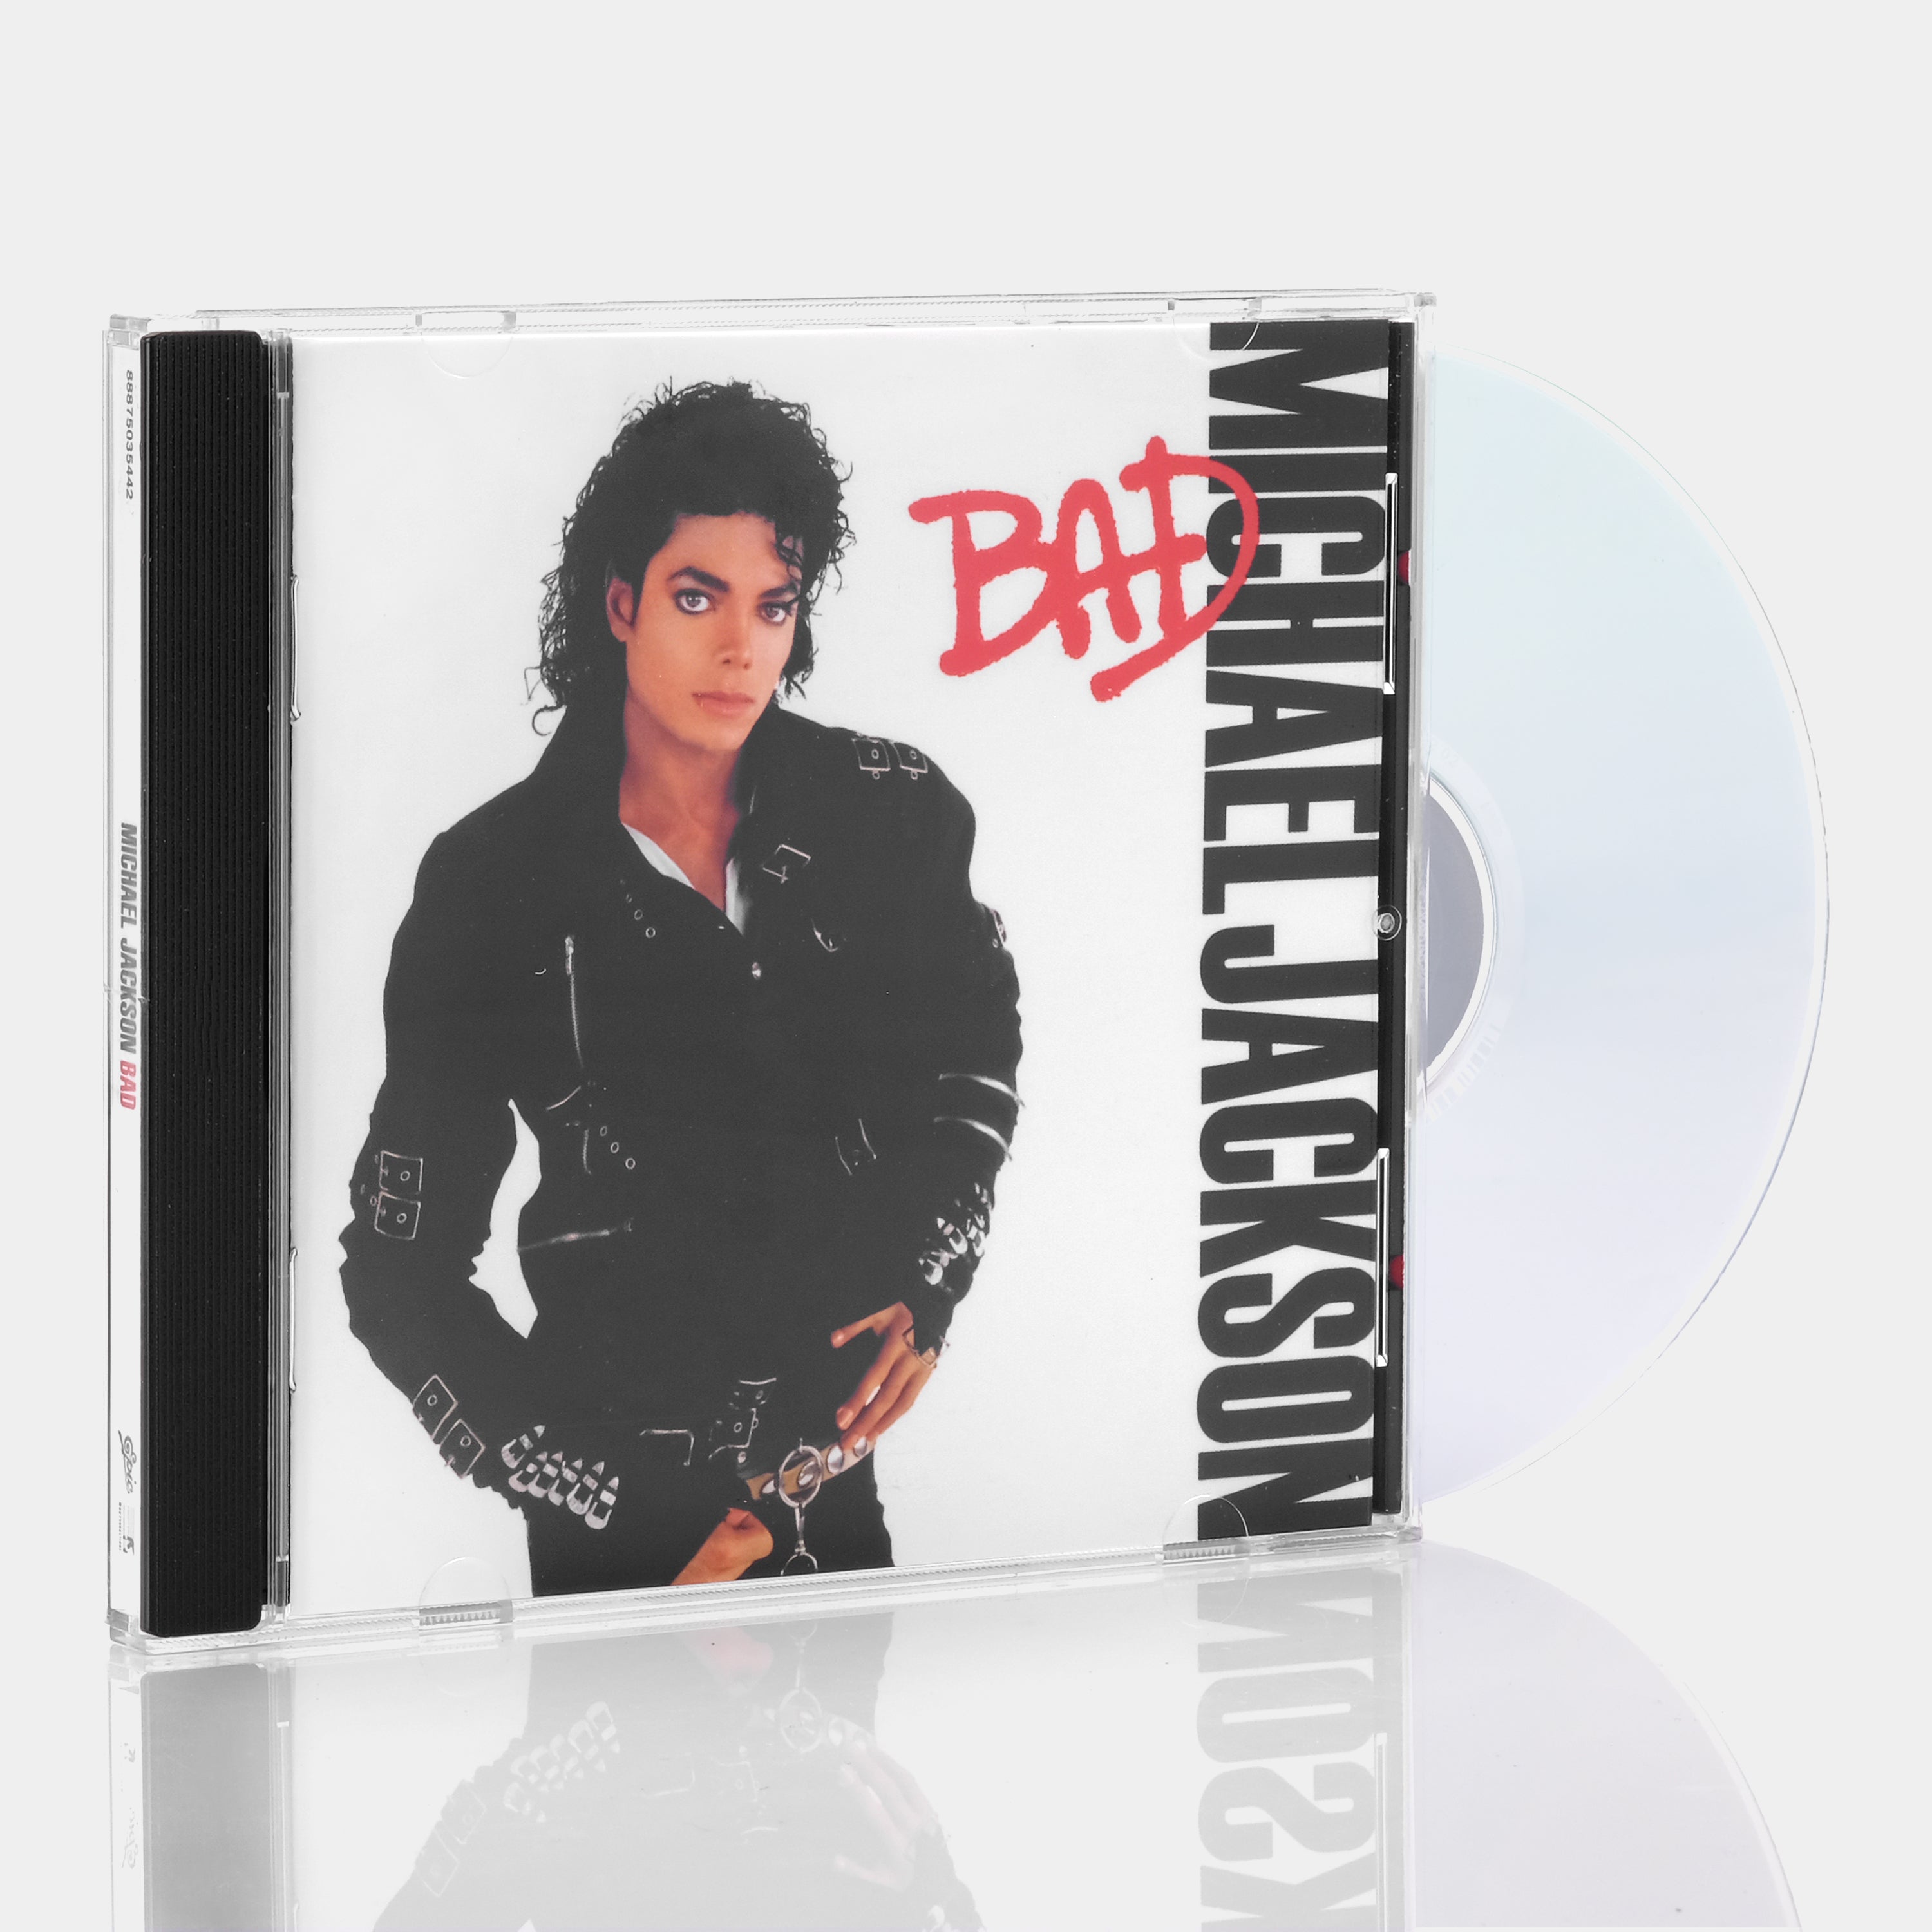 Michael Jackson - Bad CD